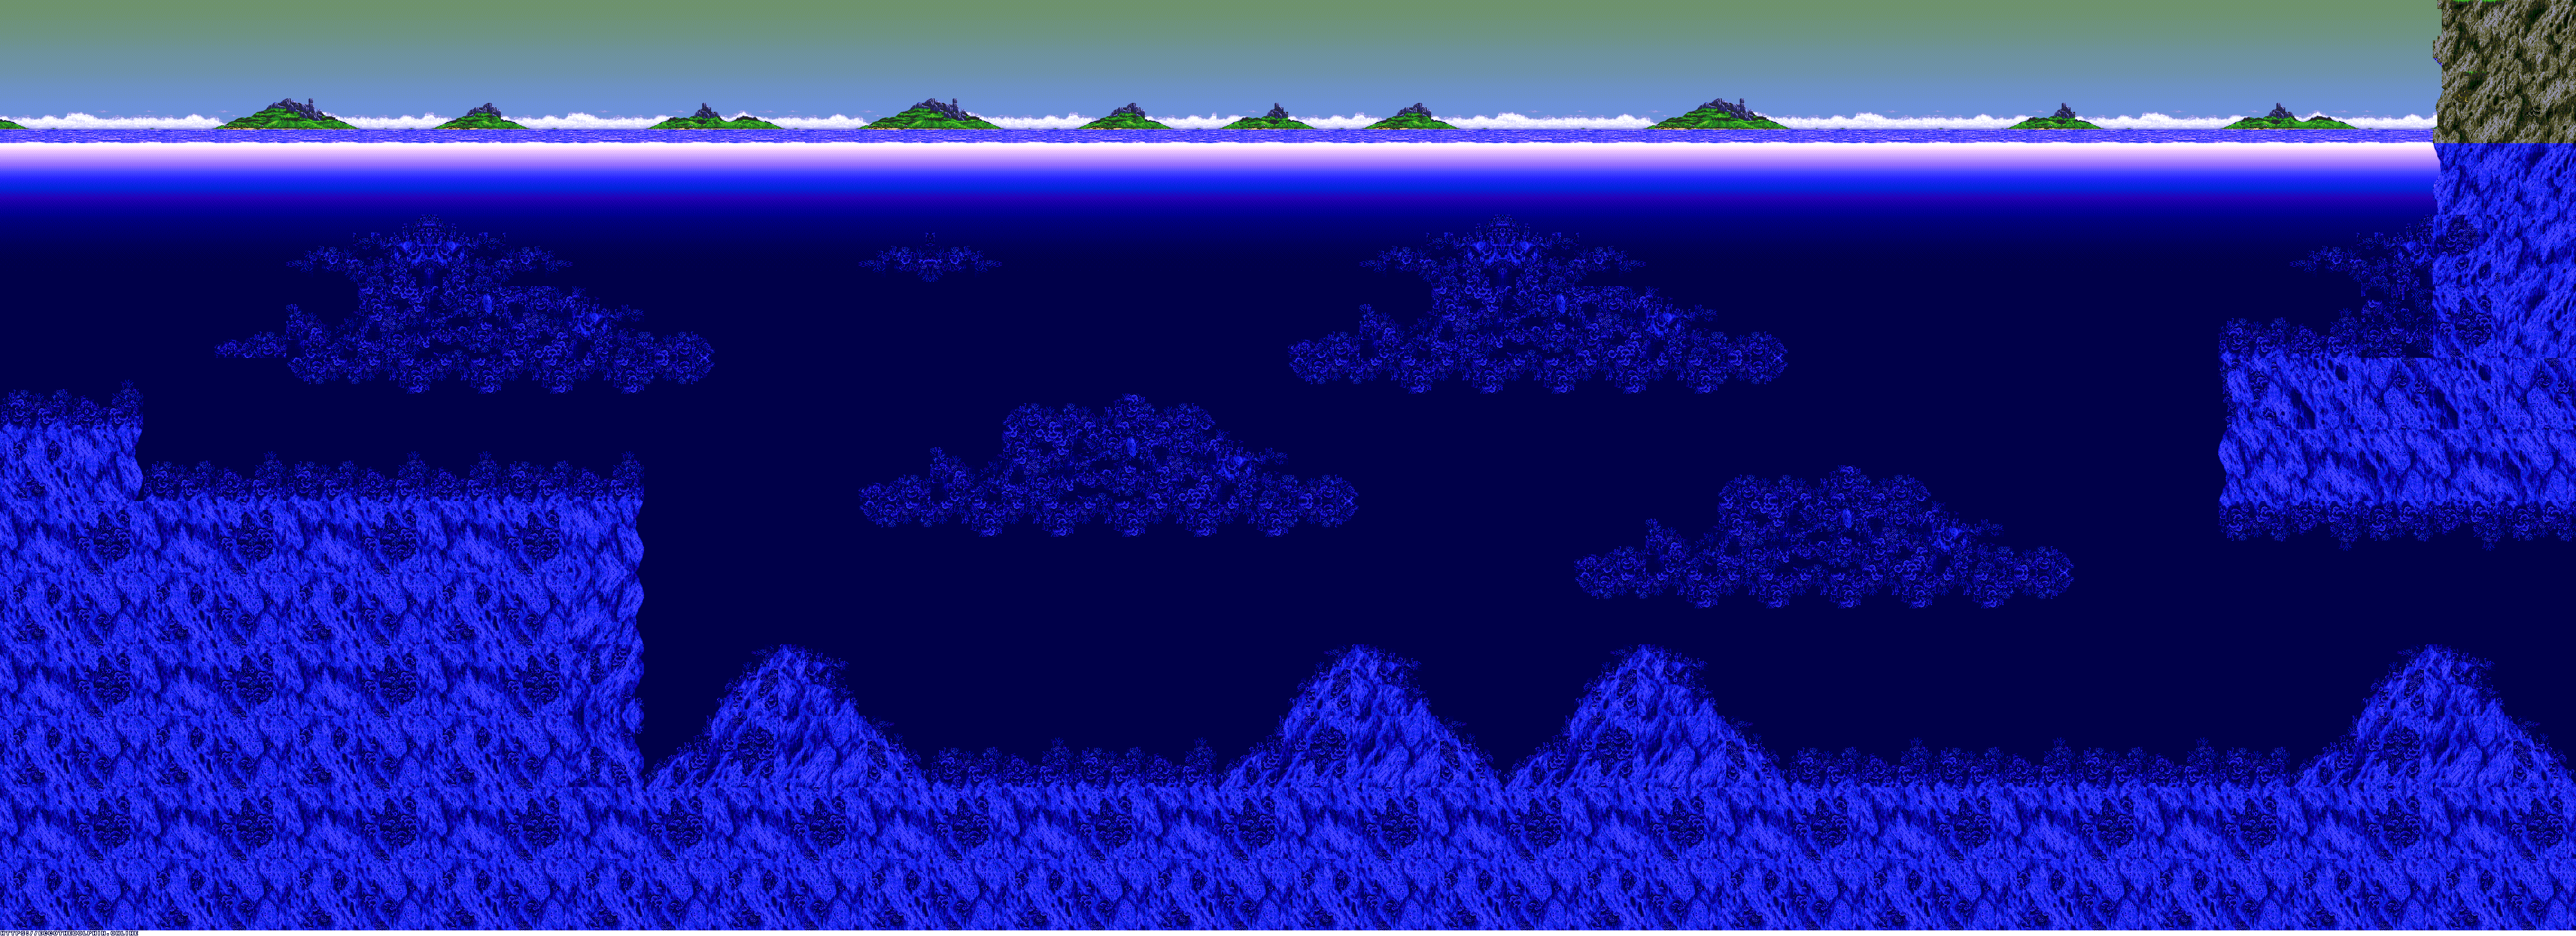 Medusa Bay (Background)